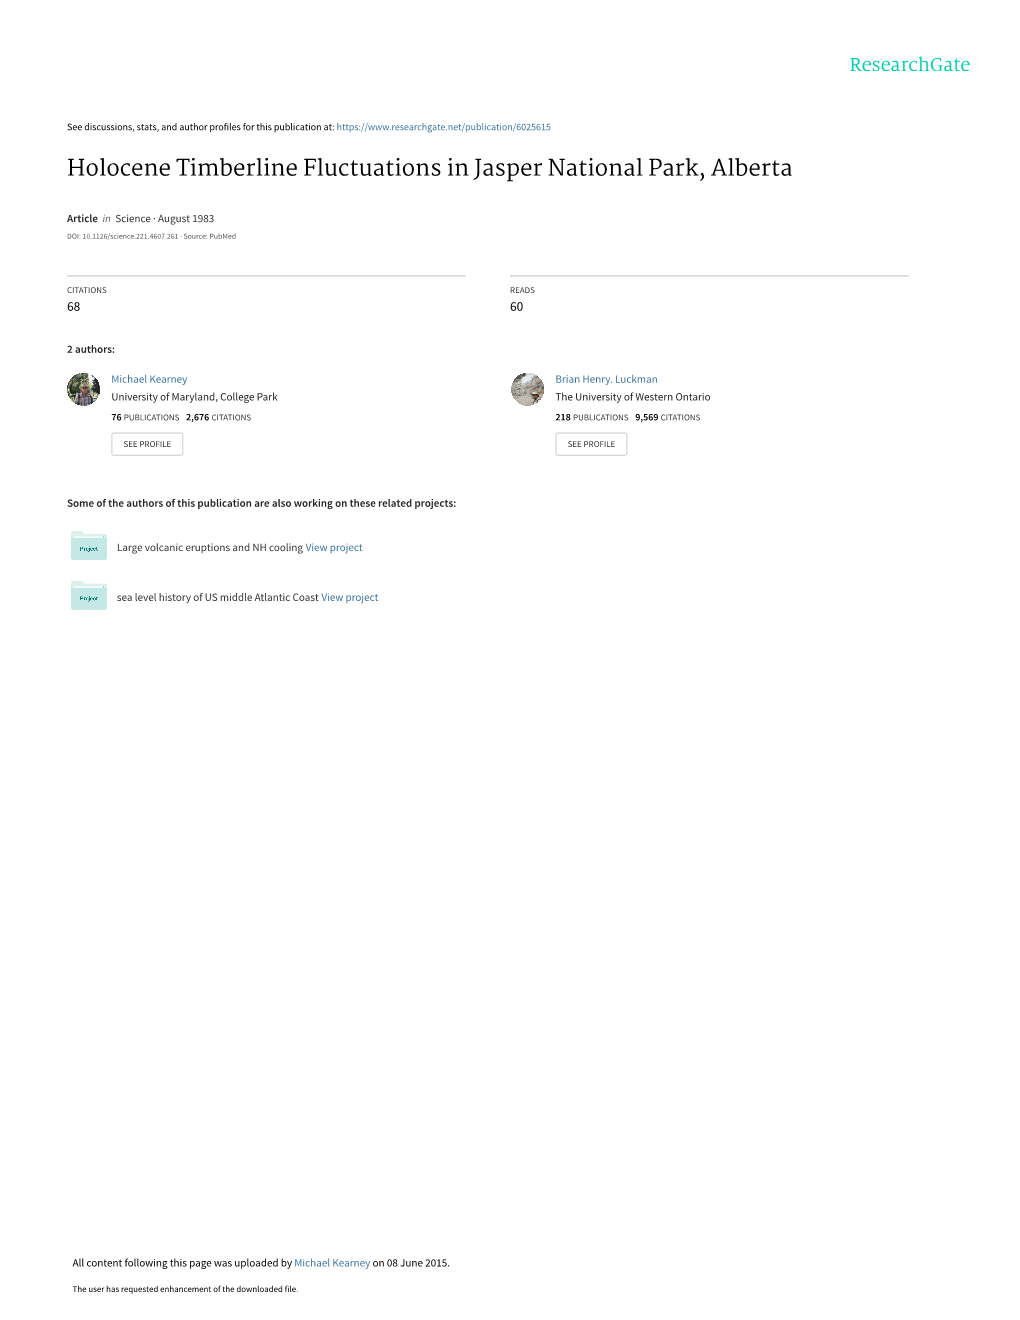 Holocene Timberline Fluctuations in Jasper National Park, Alberta